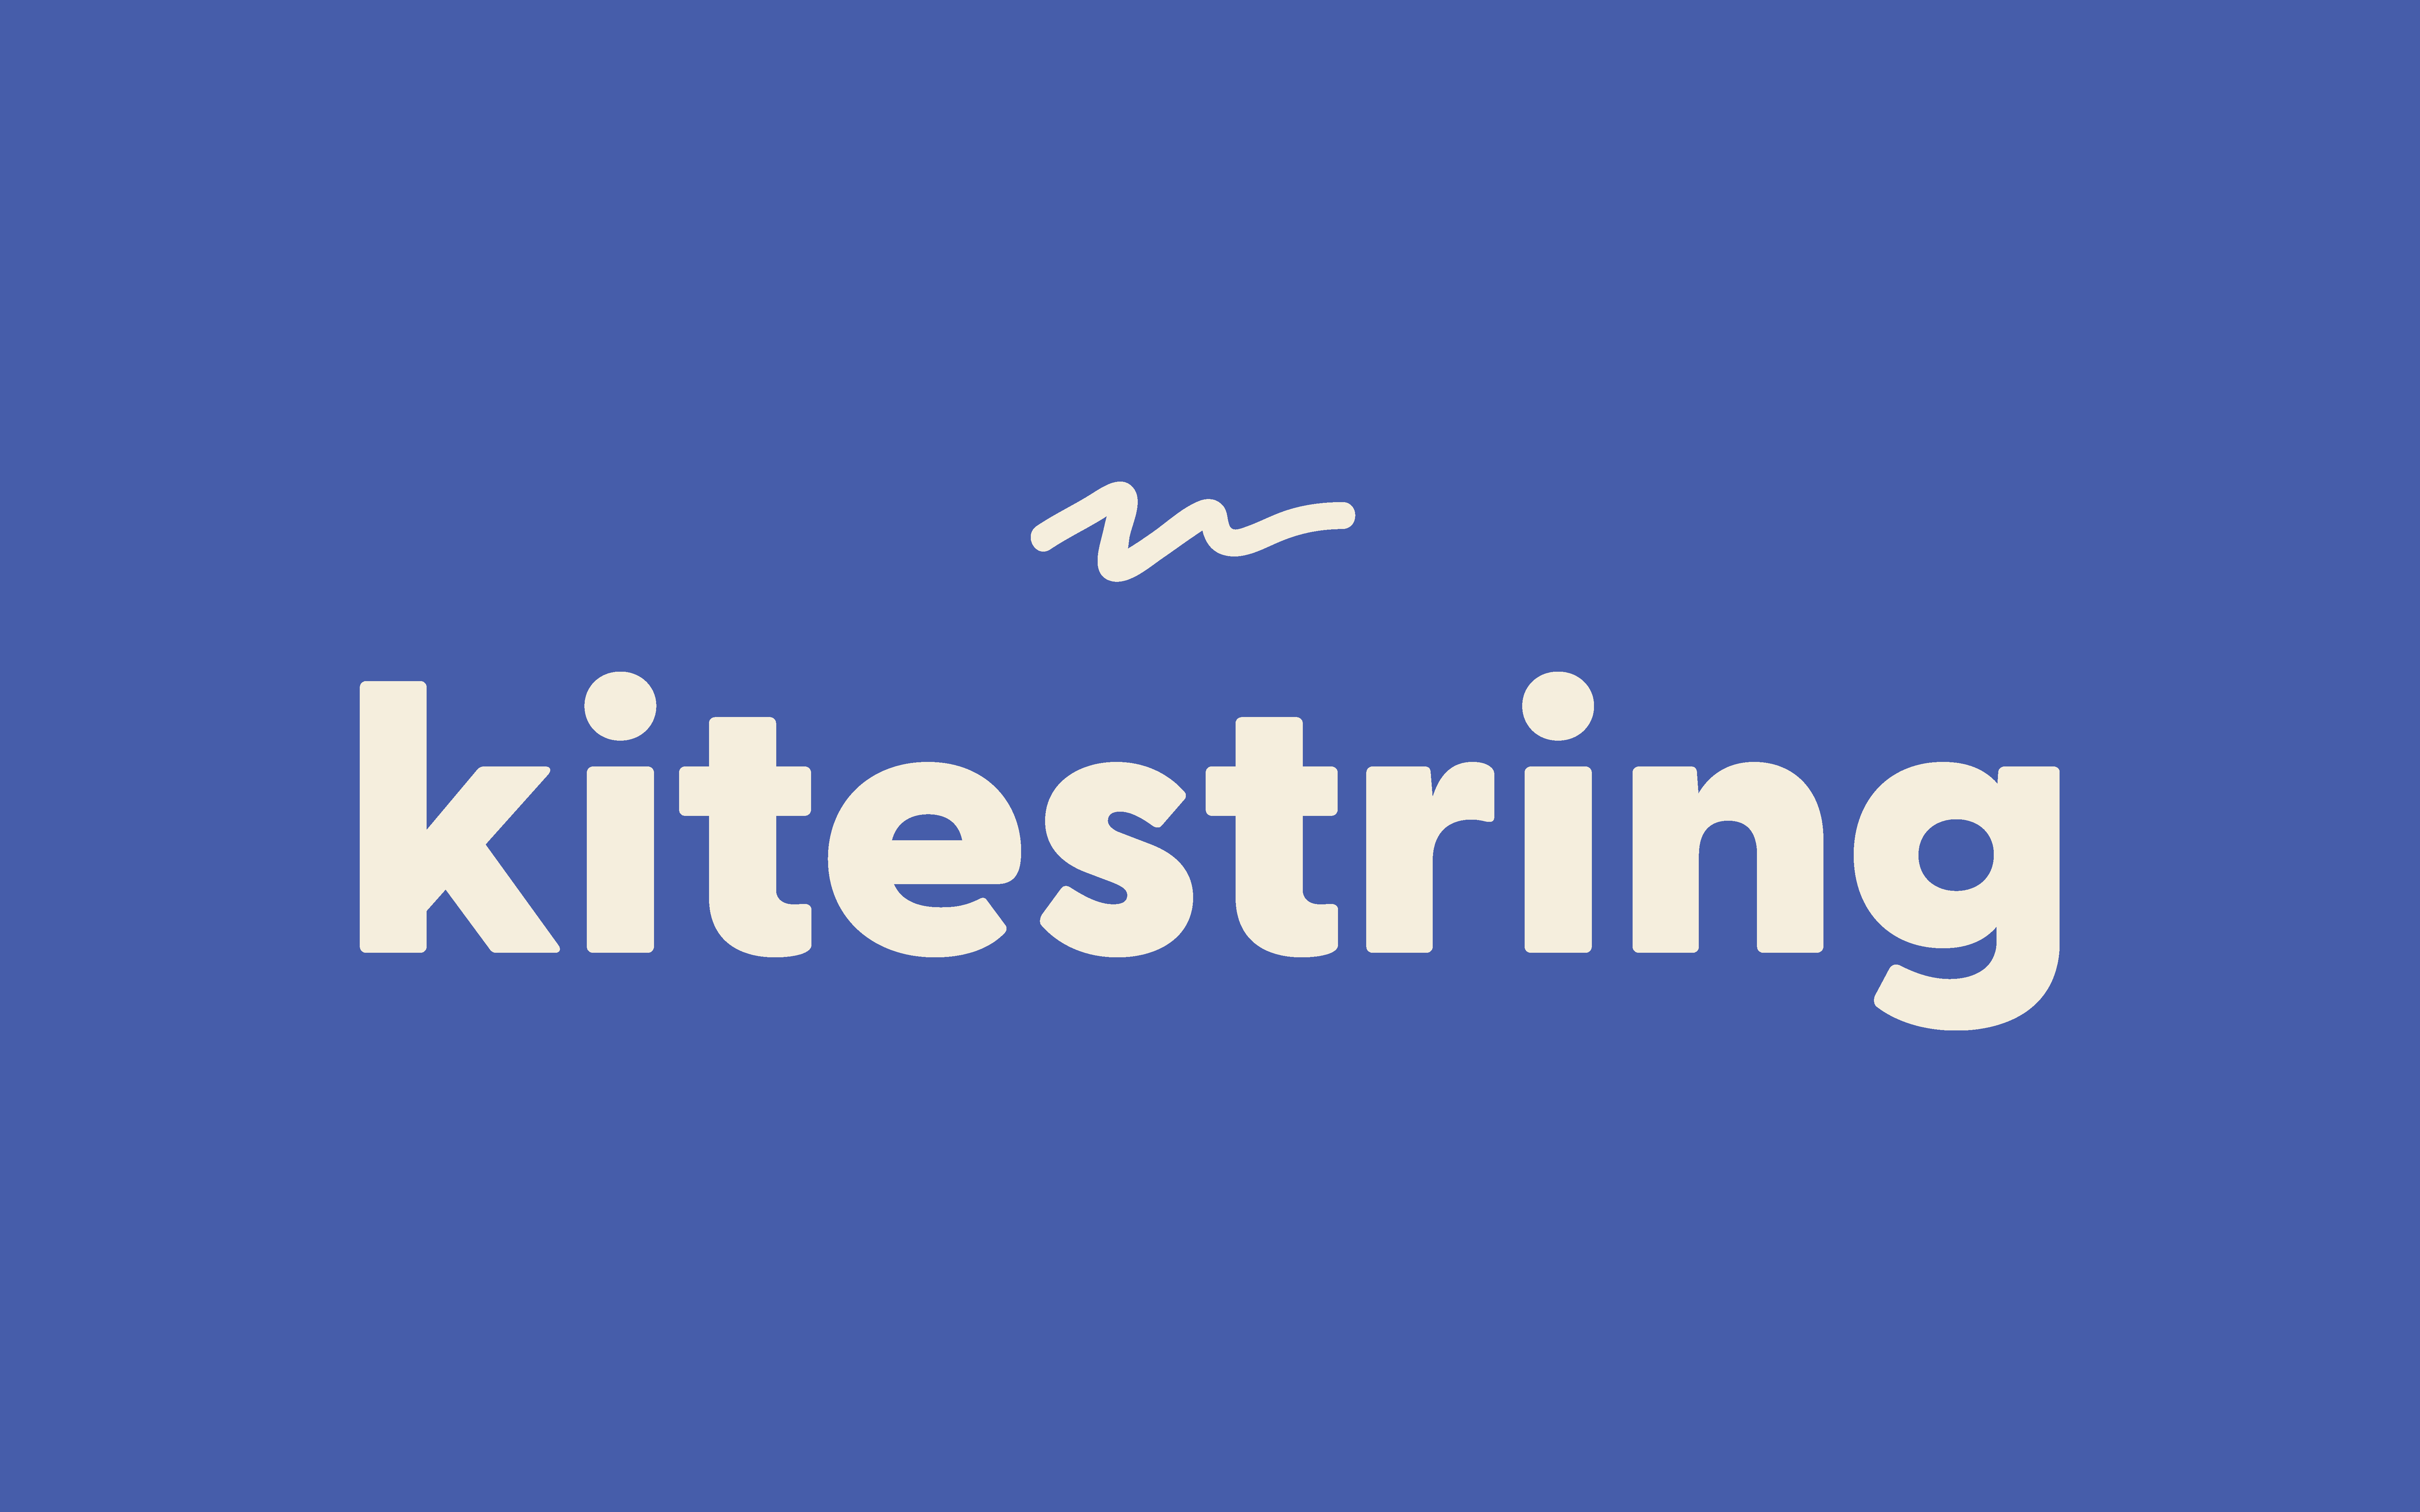 Off-white Kitestring logo on a blue background